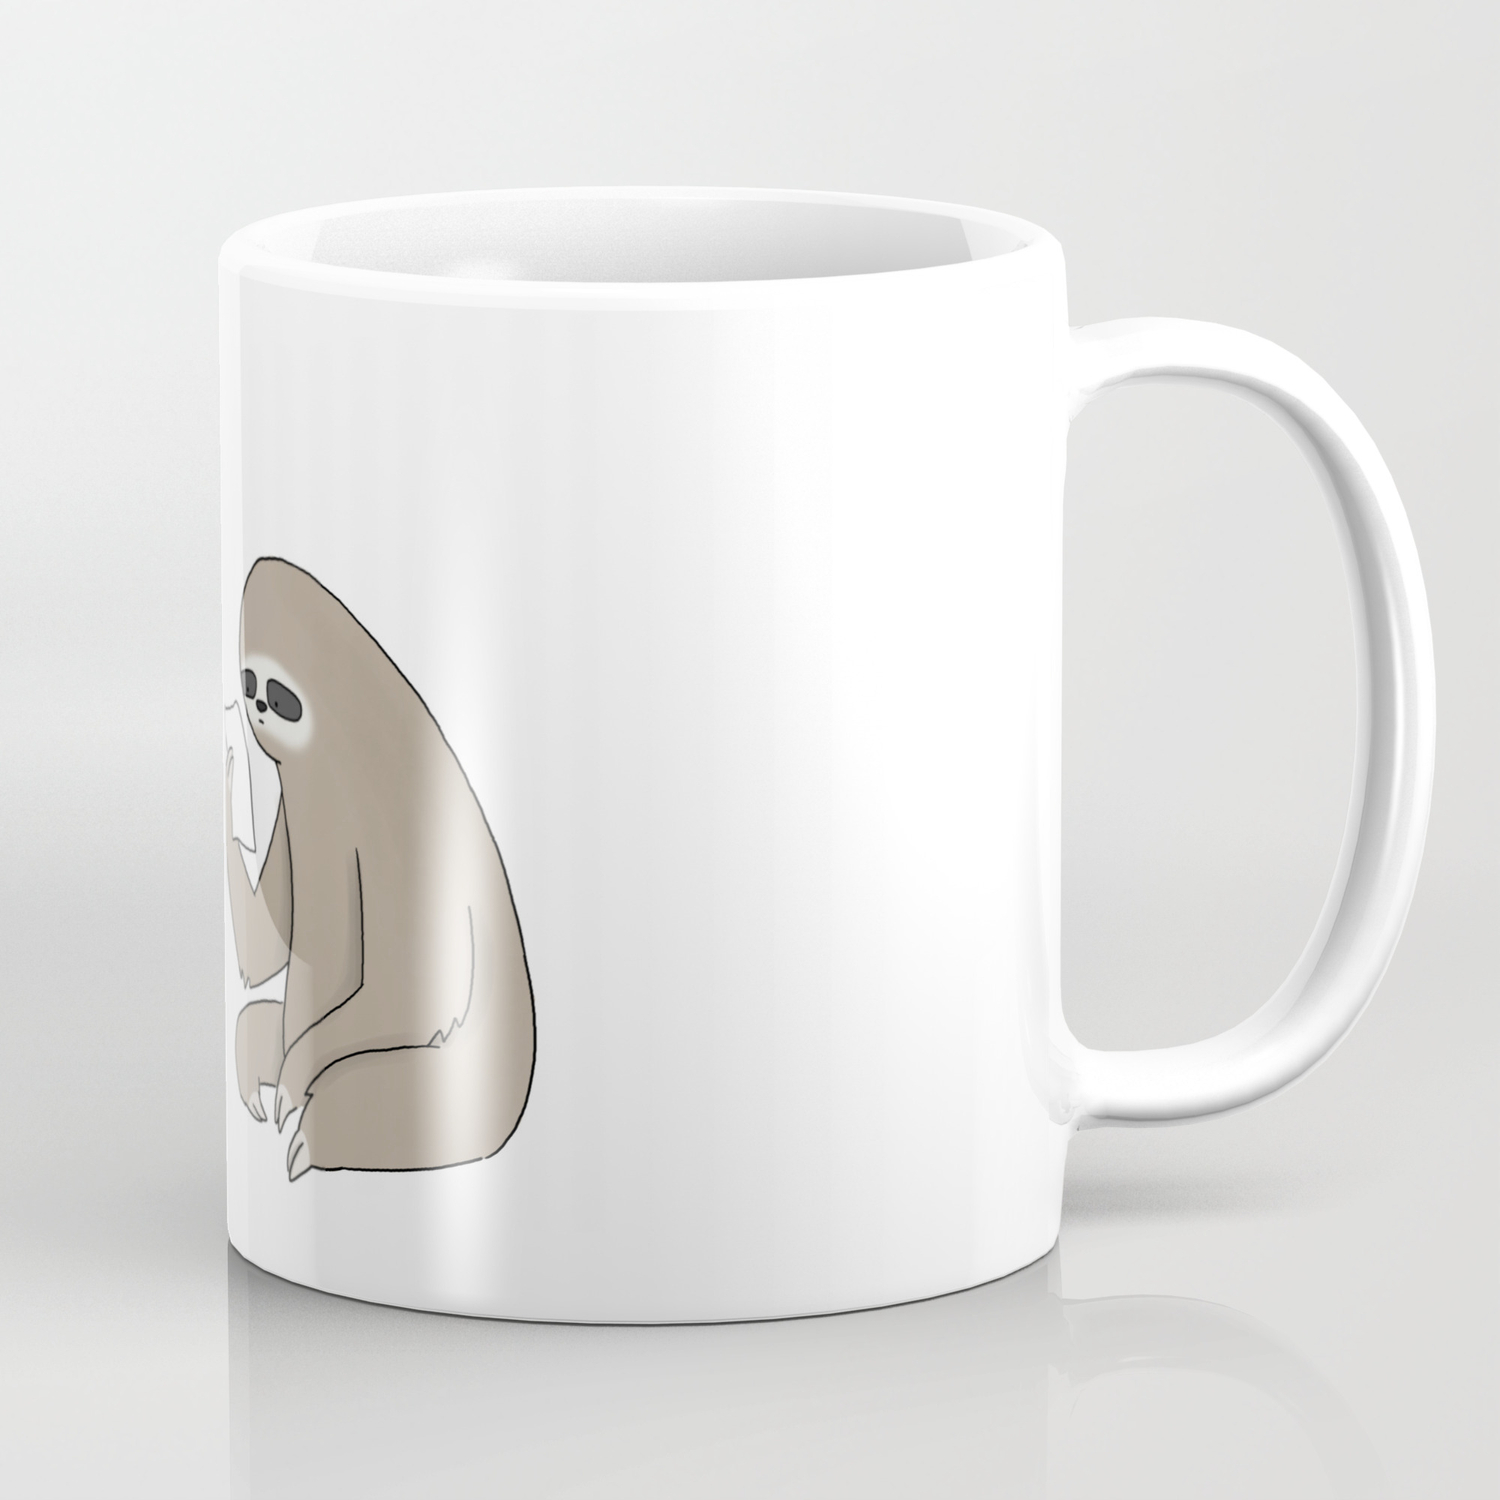 Details about   Gift Coffee Mug Sloth Saying Sloth Ts468 